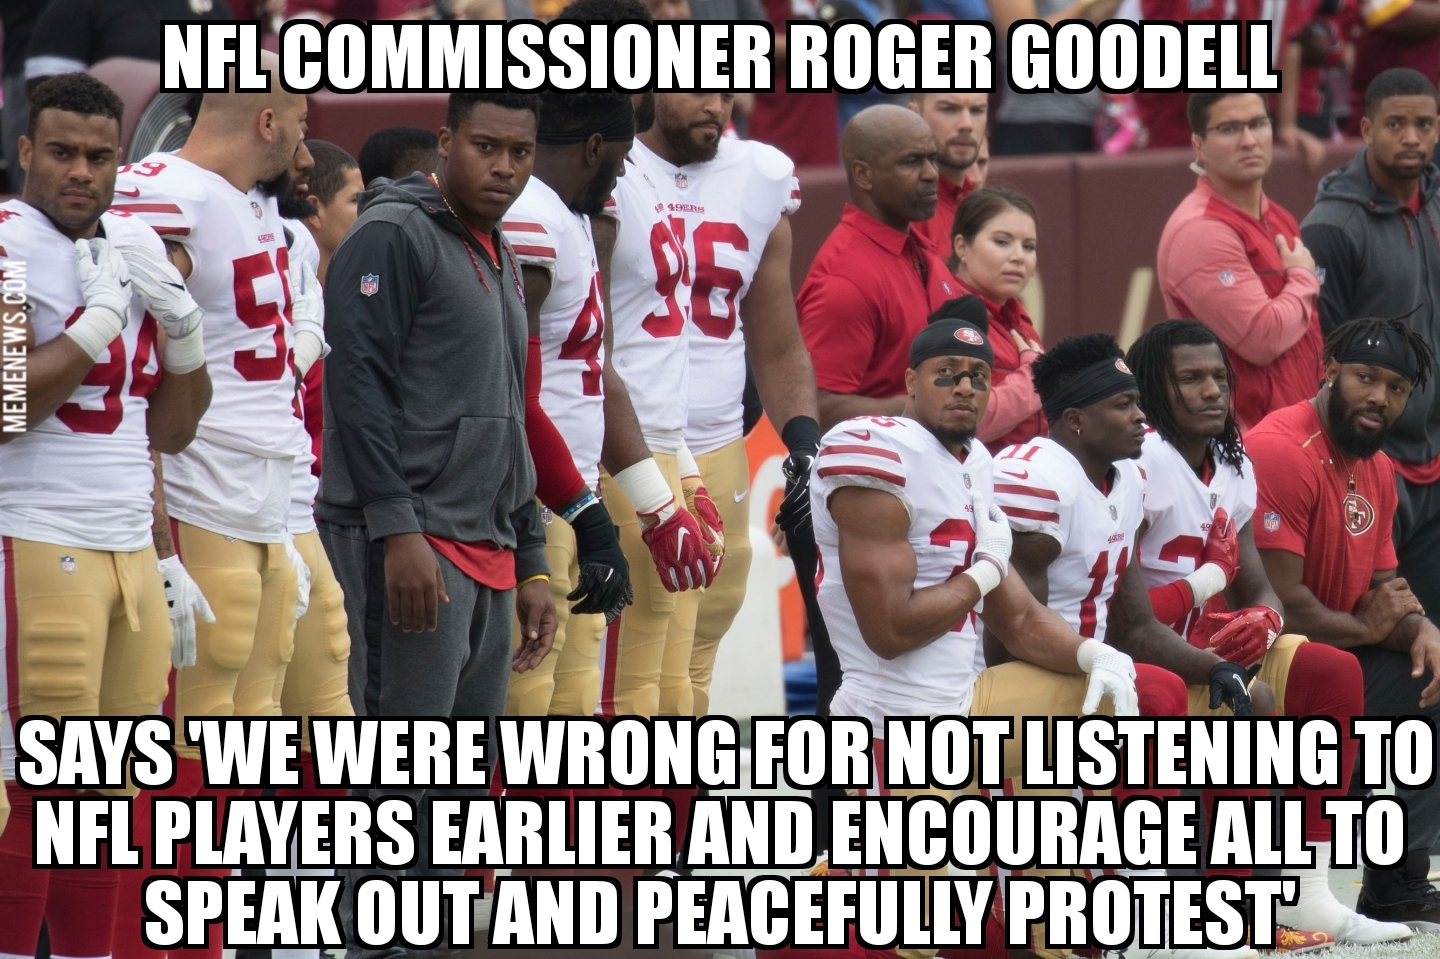 NFL commissioner encourages peaceful protest